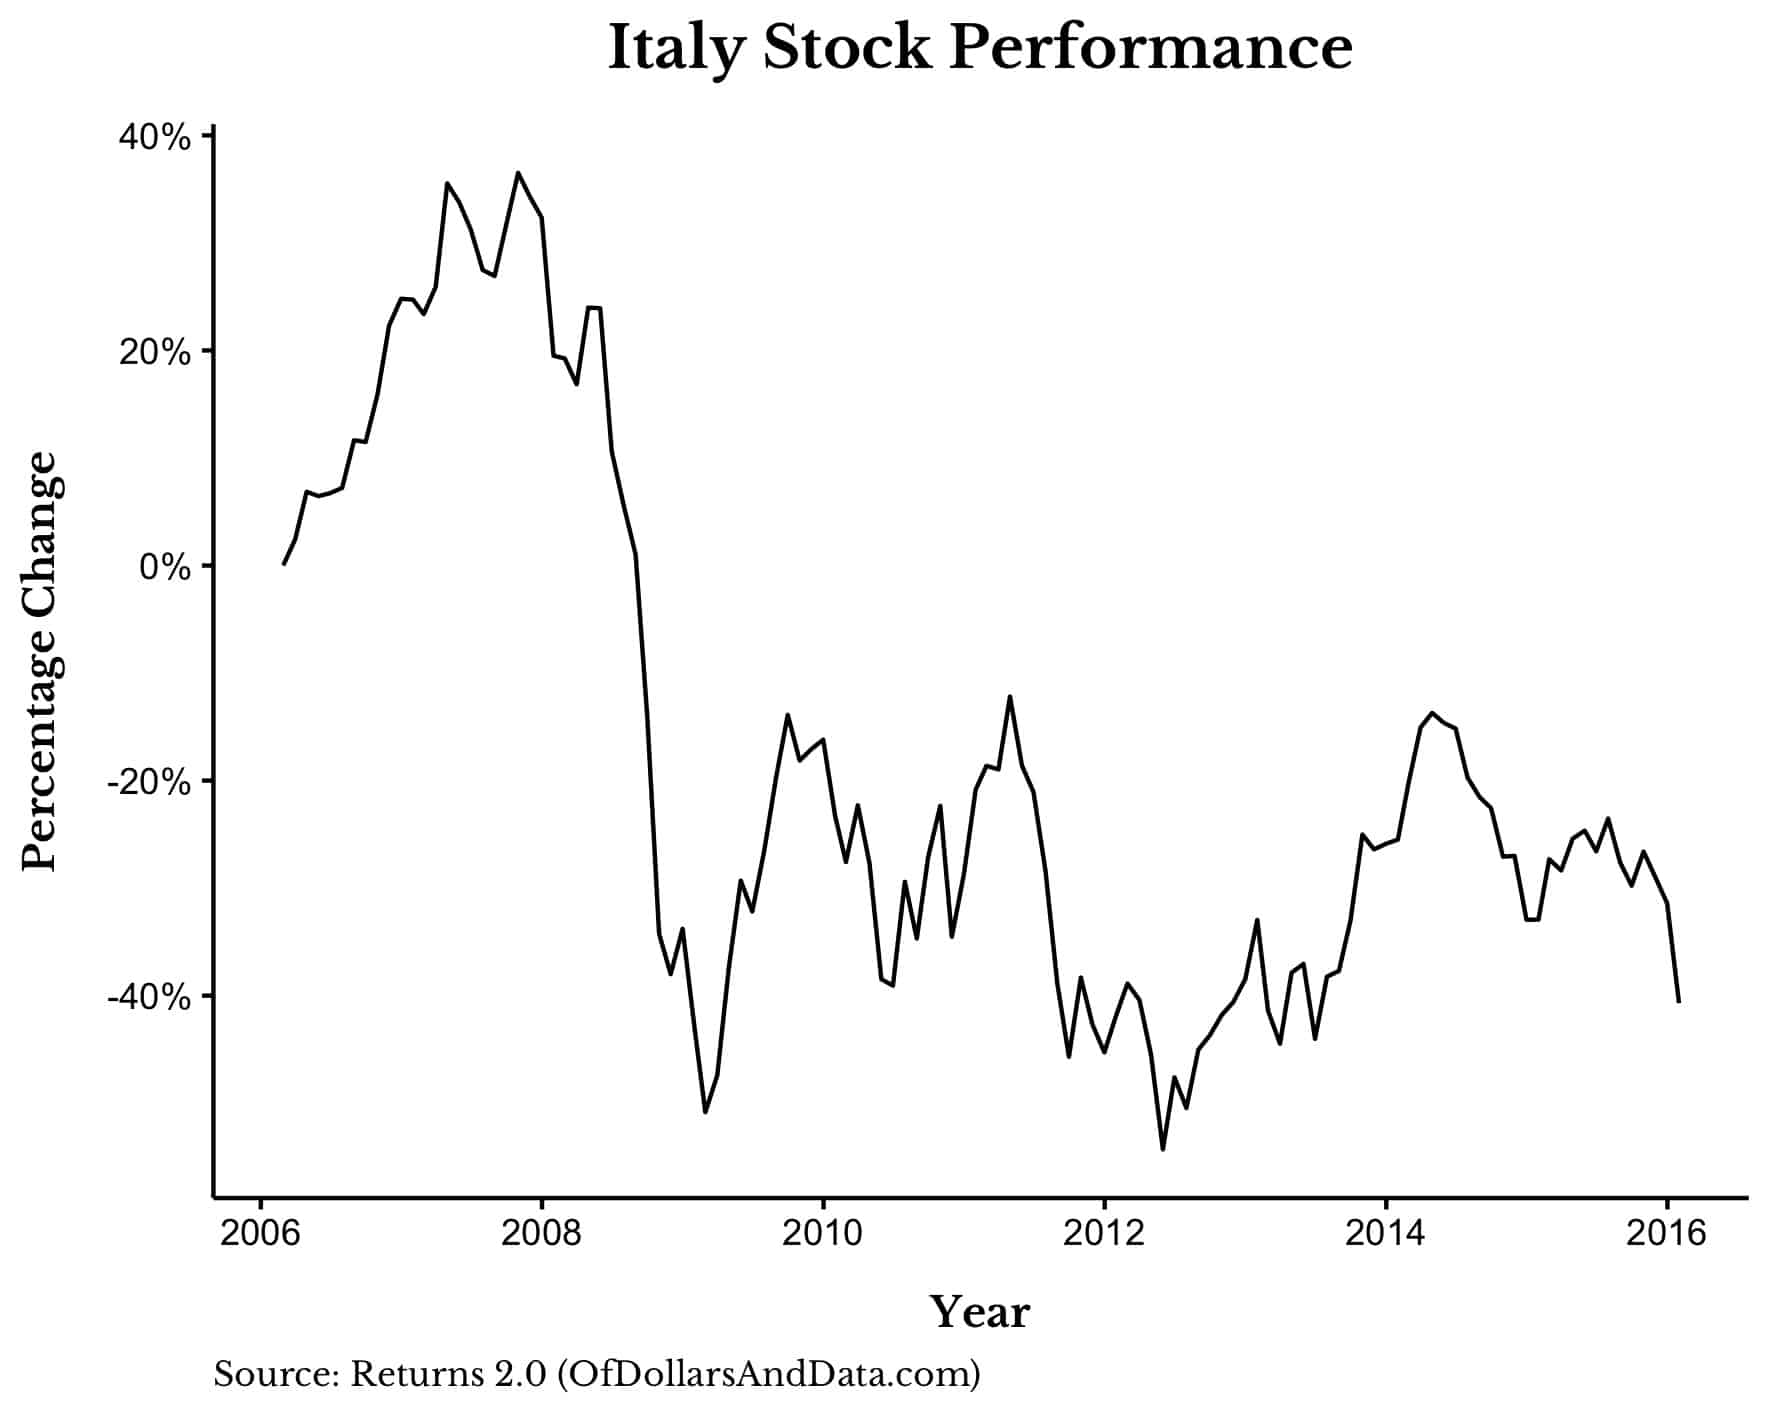 Italy stock market peformance 2006 to 2016